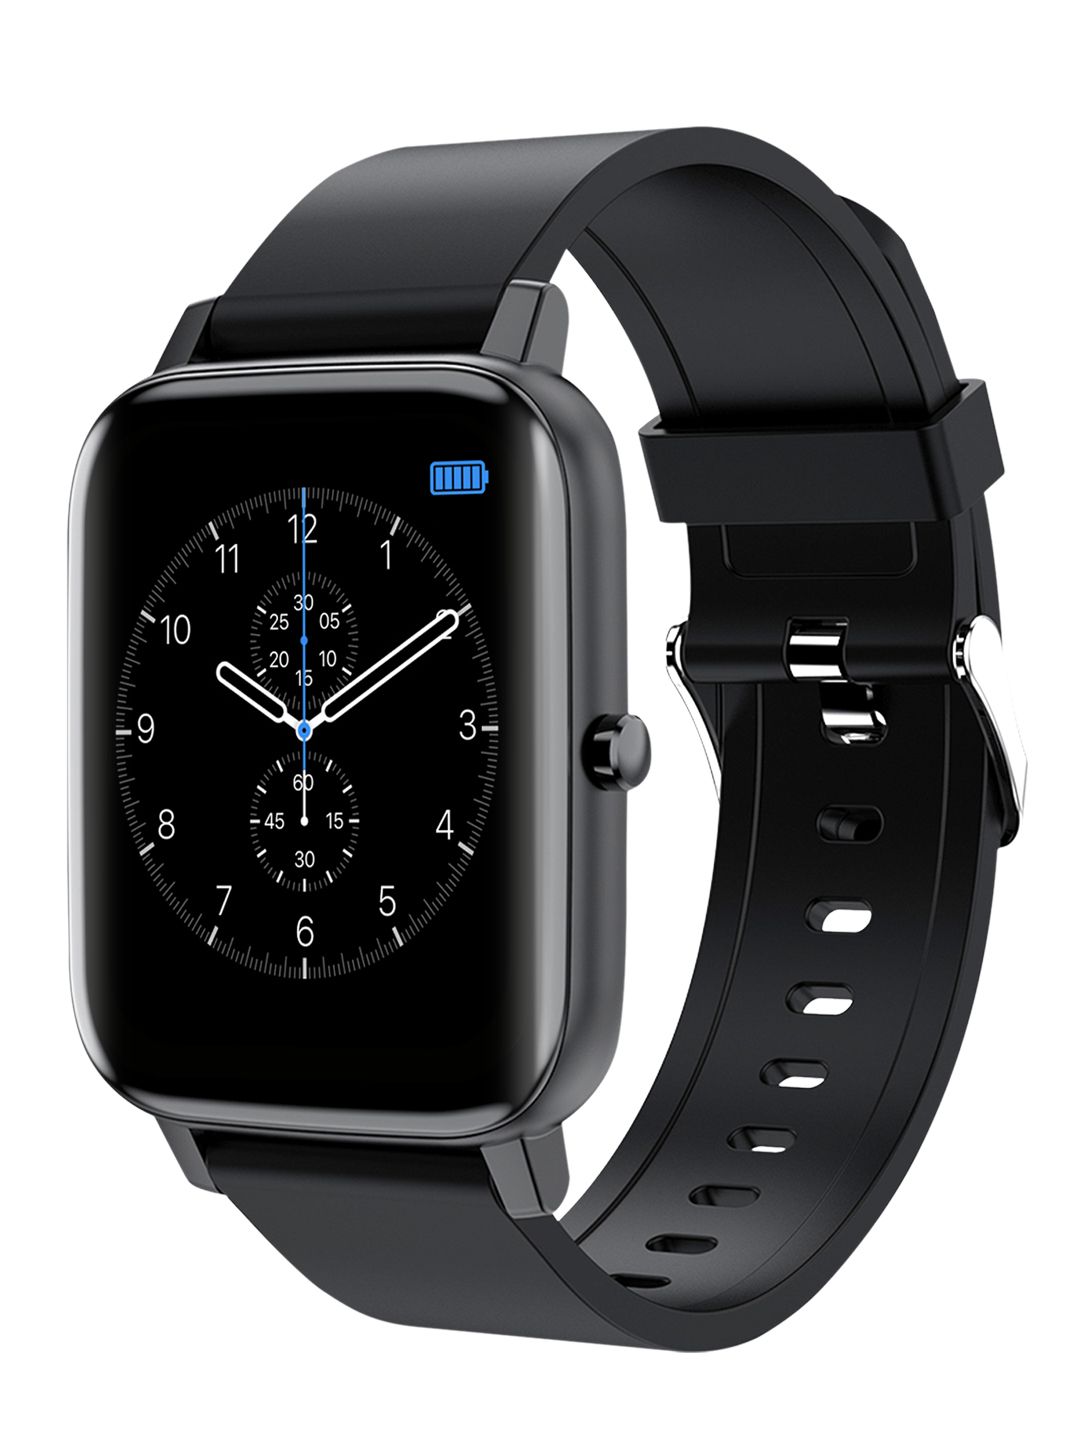 TAGG Unisex Black Verve Plus Smartwatch Price in India